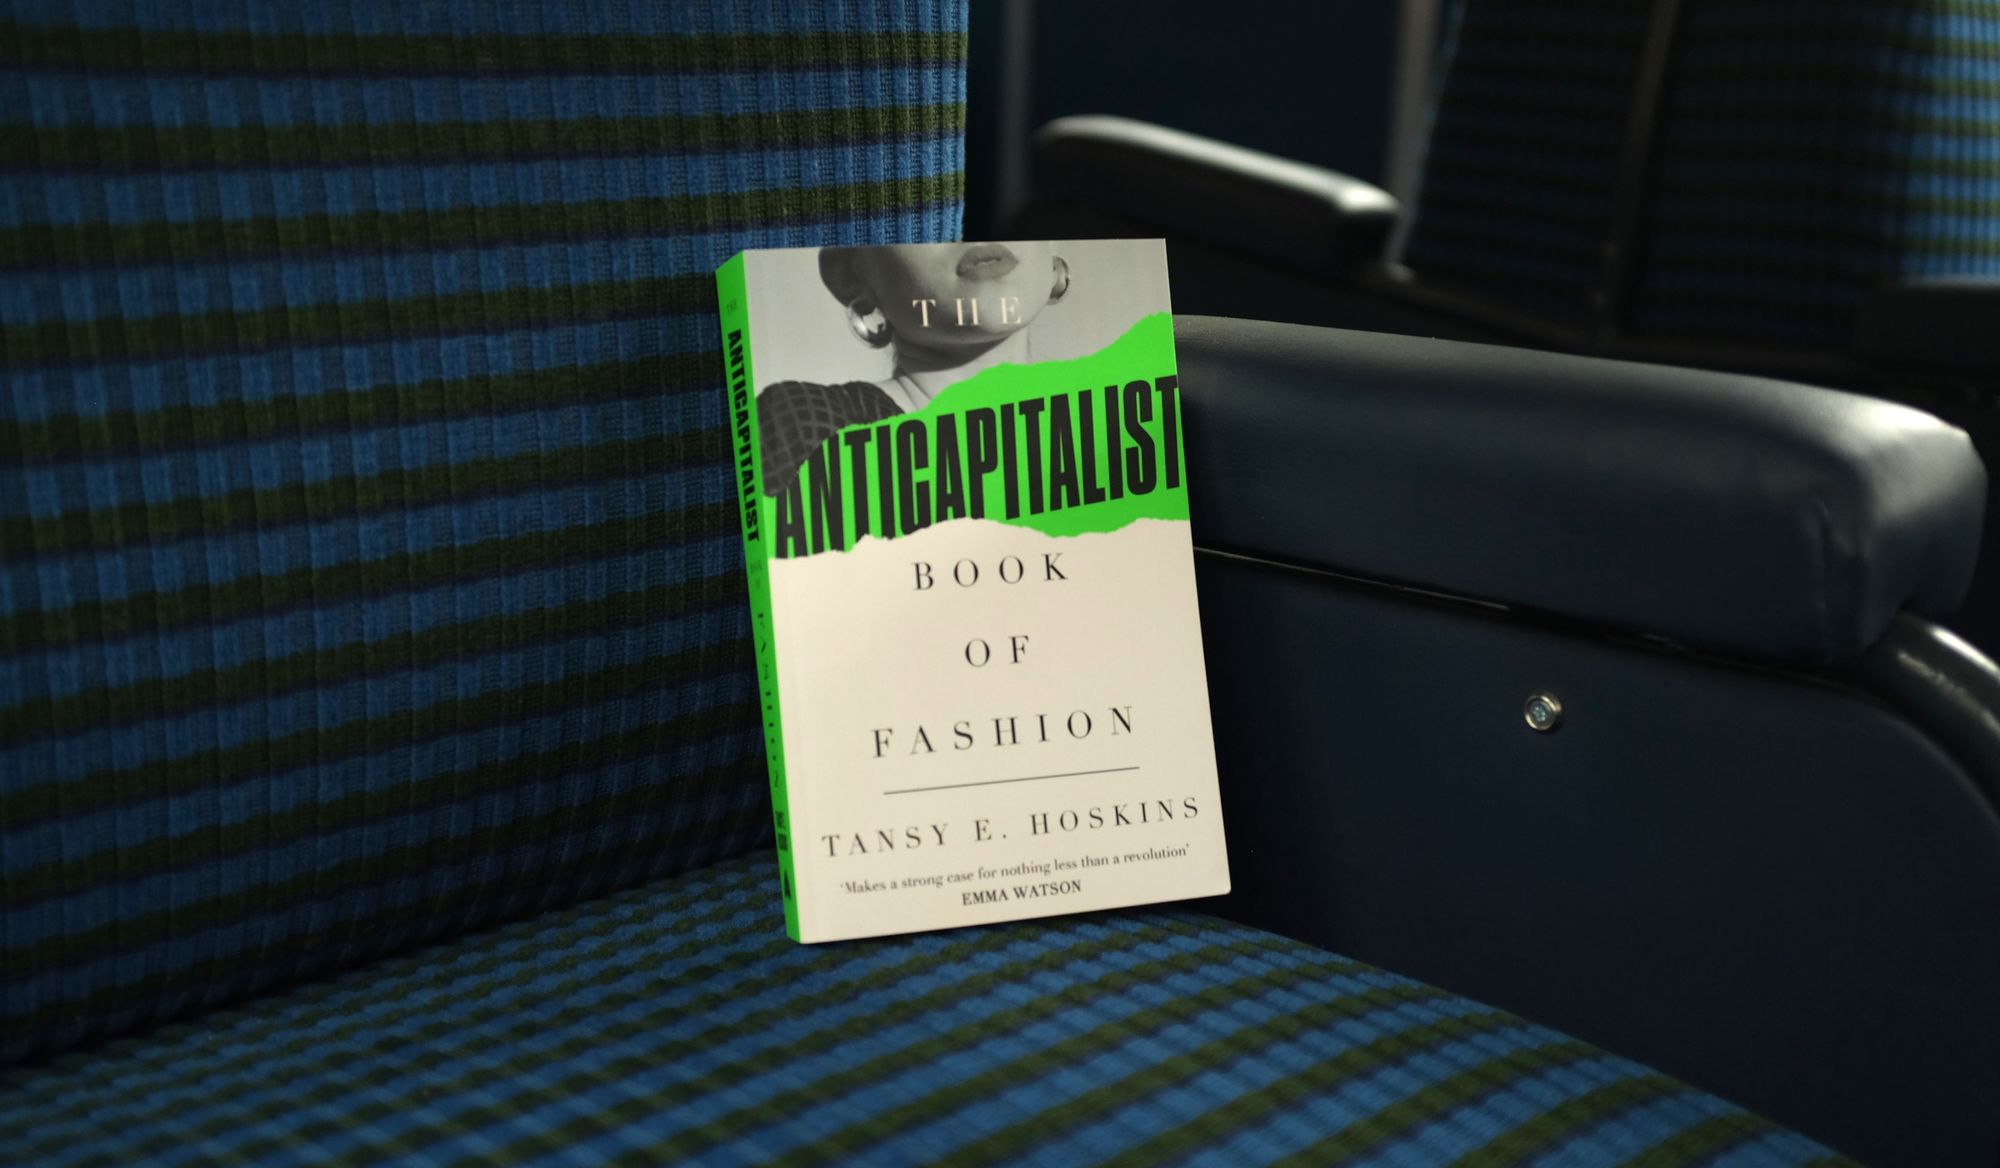 The Anti-Capitalist Book Of Fashion